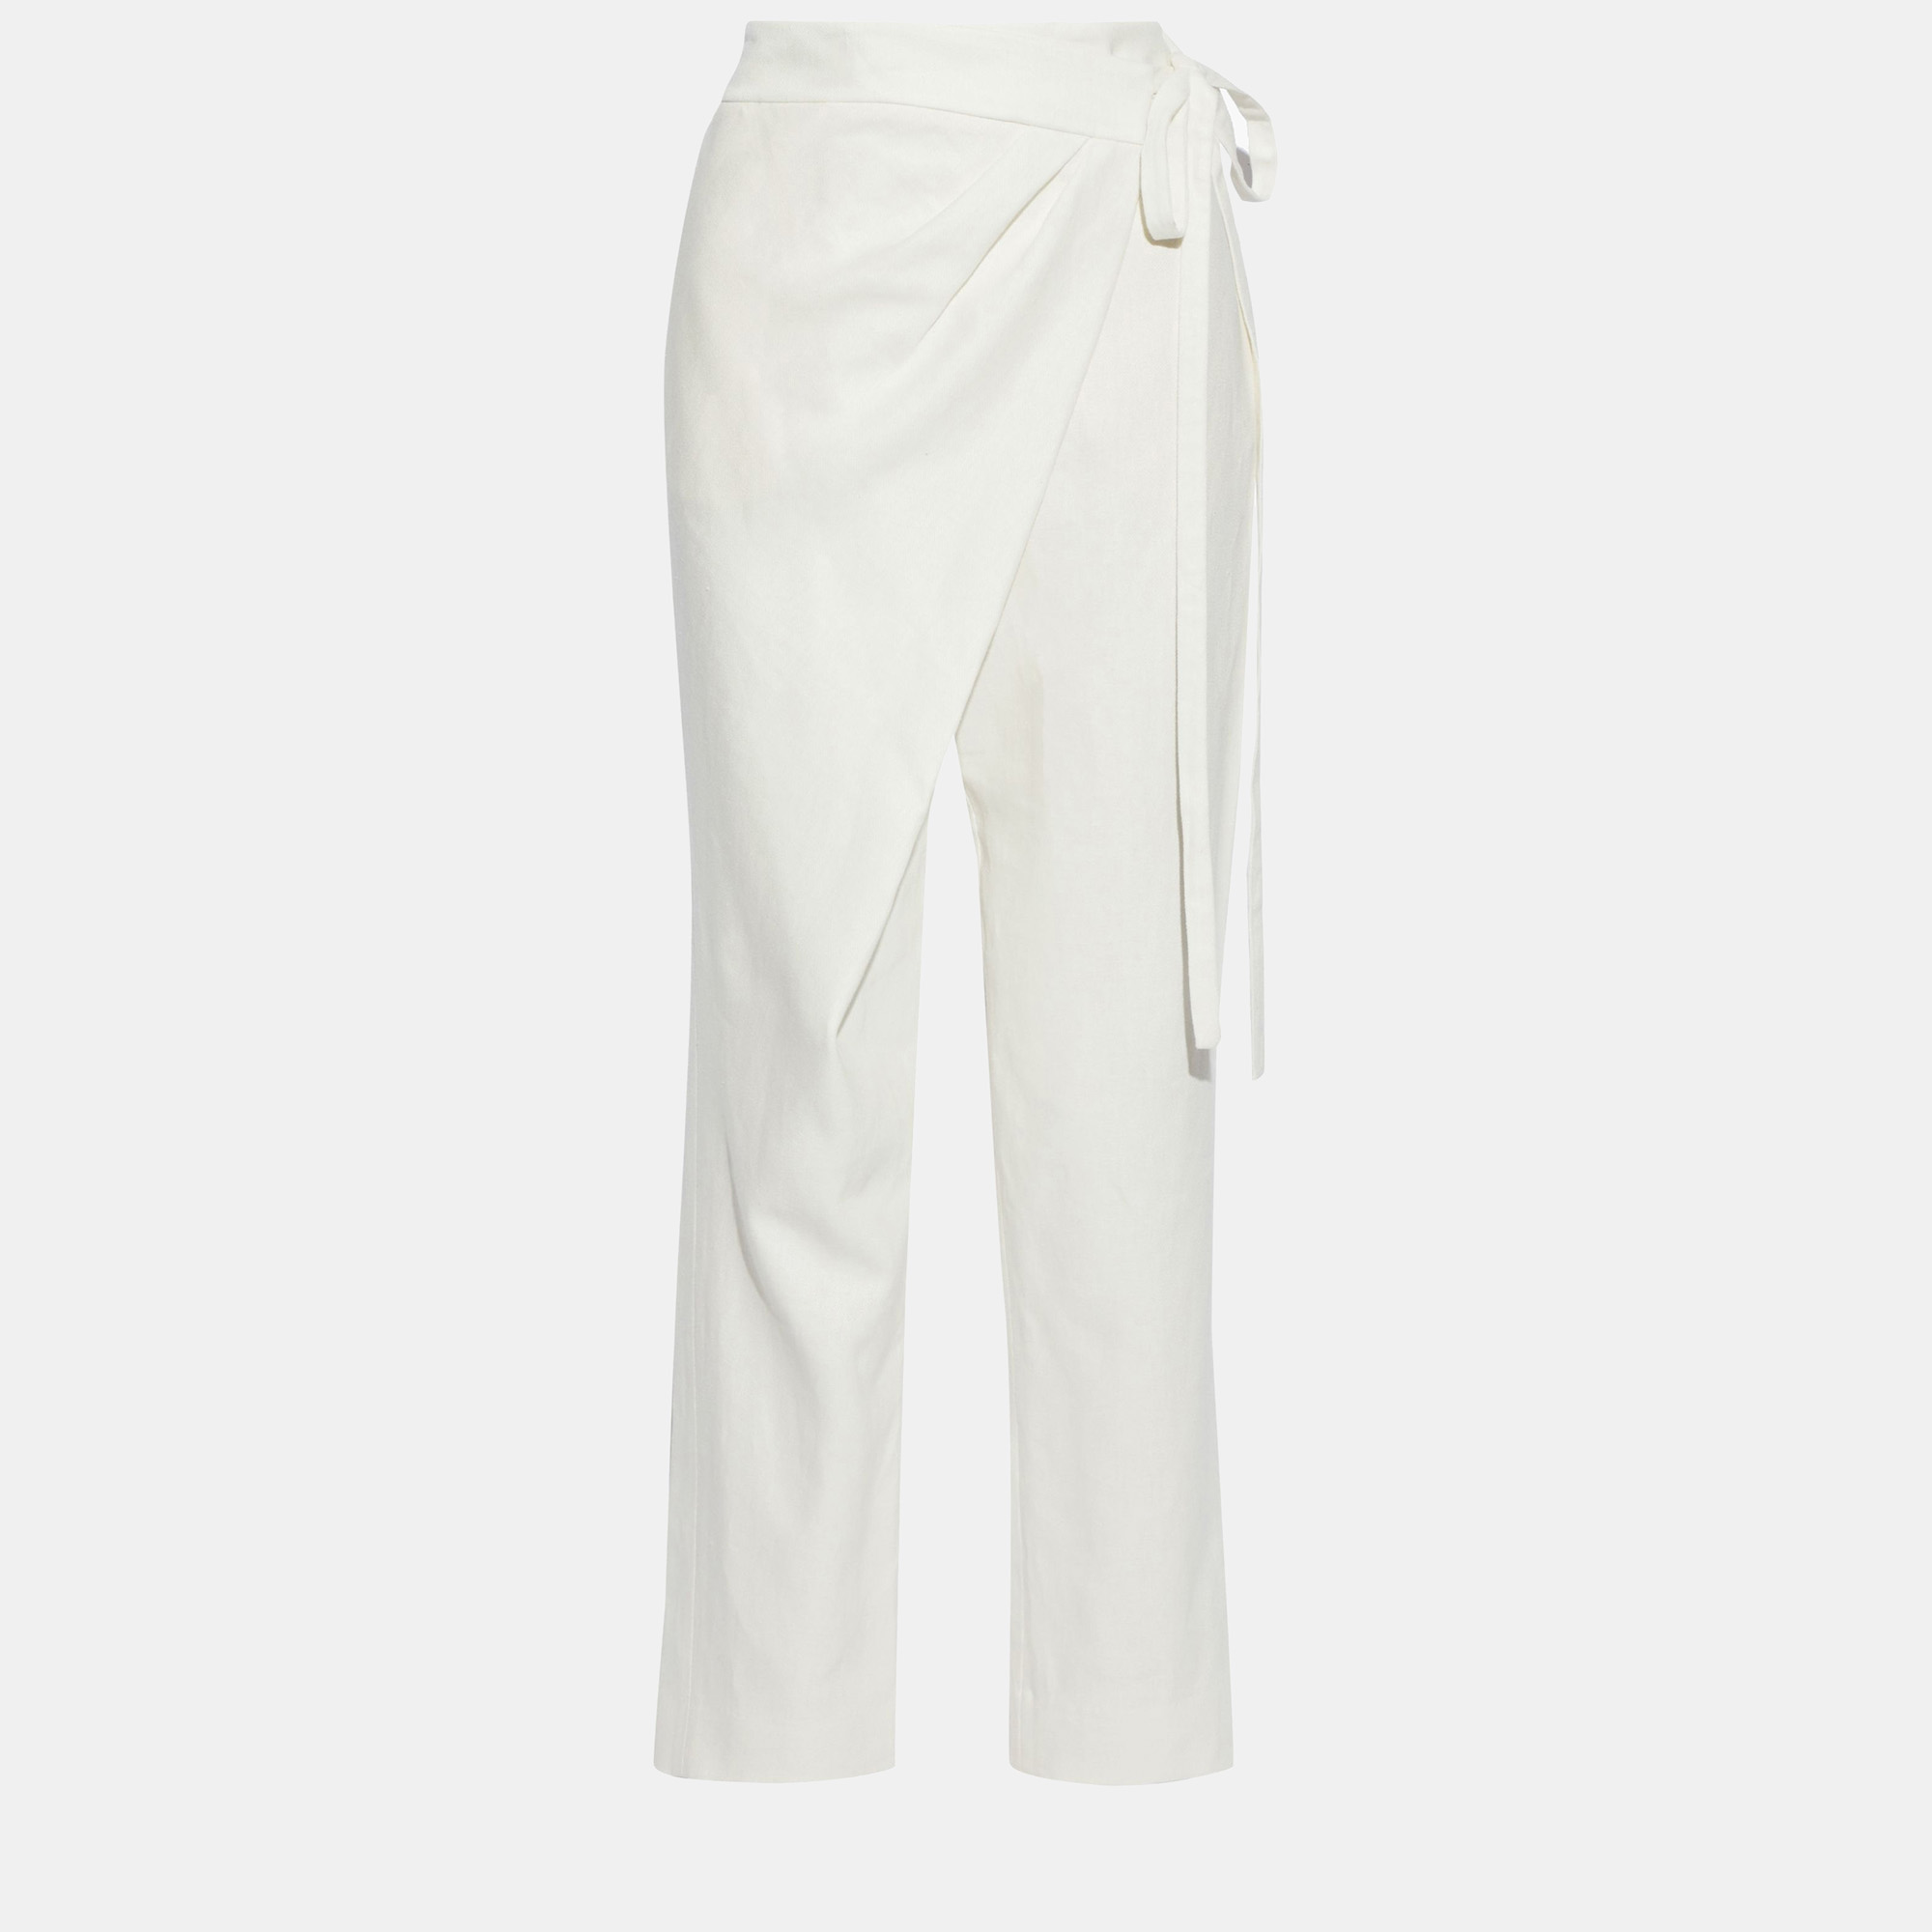 Oscar de la renta ivory white linen-blend wrap trousers m (us 6)